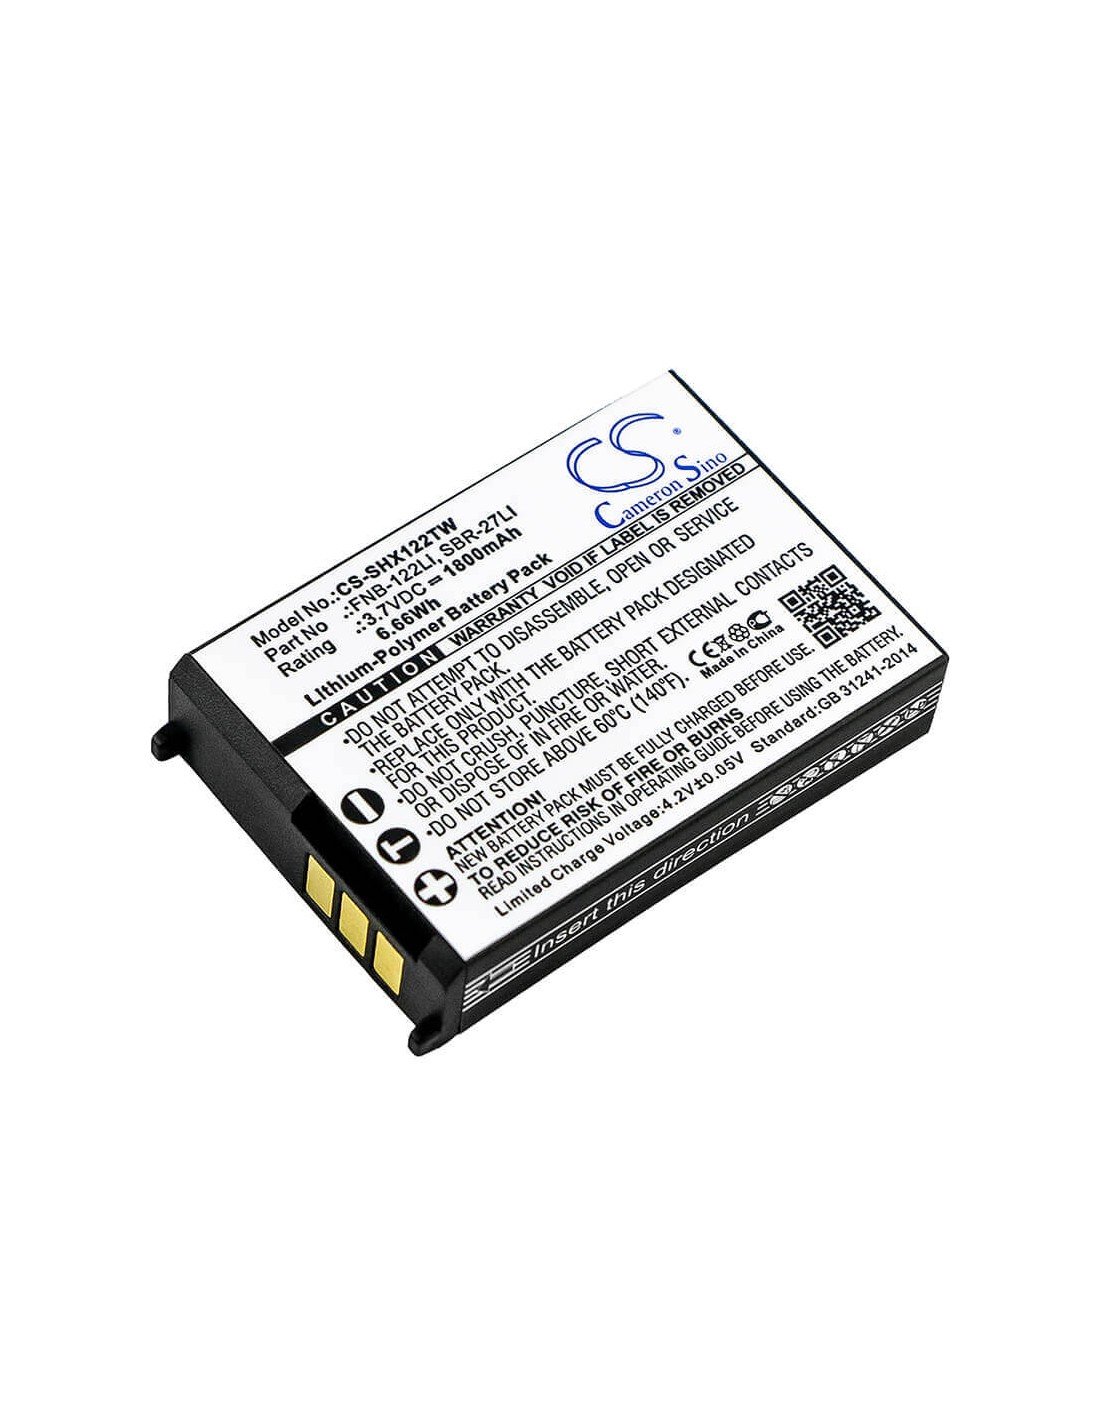 Battery for Horizon, Hx300, Standard Horizon, Hx300 3.7V, 1800mAh - 6.66Wh